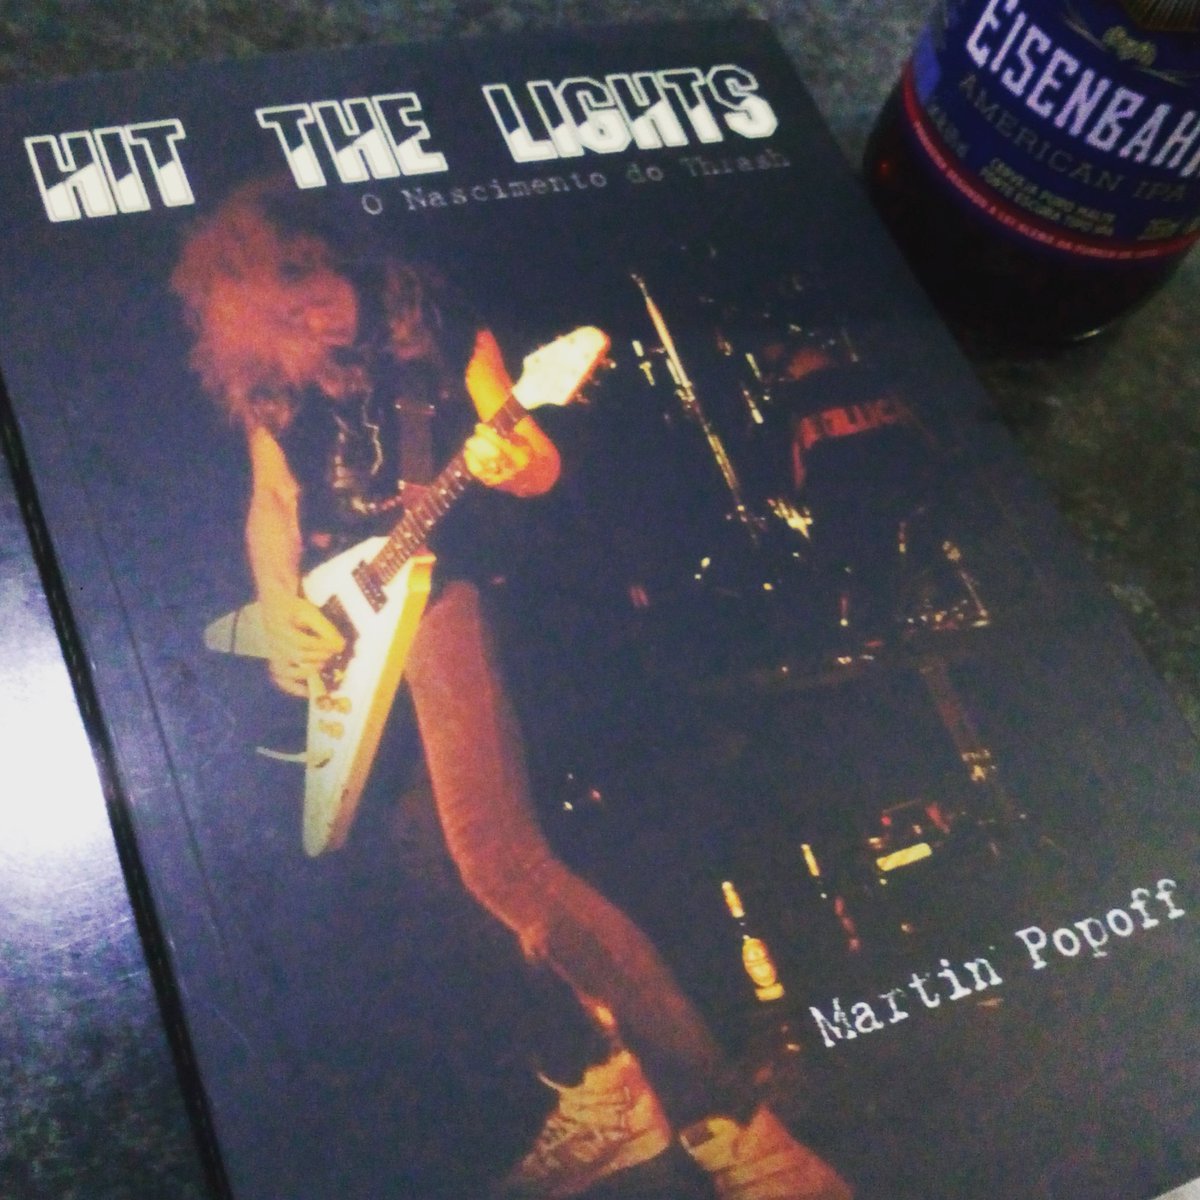 Começando esse livro...

#hitthelights #martinpopoff #book #livro #thrashmetal #80s #metal  #80sMetal #slayer #Metallica #exodus #anthrax #megadeth #deathangel #overkill #testament